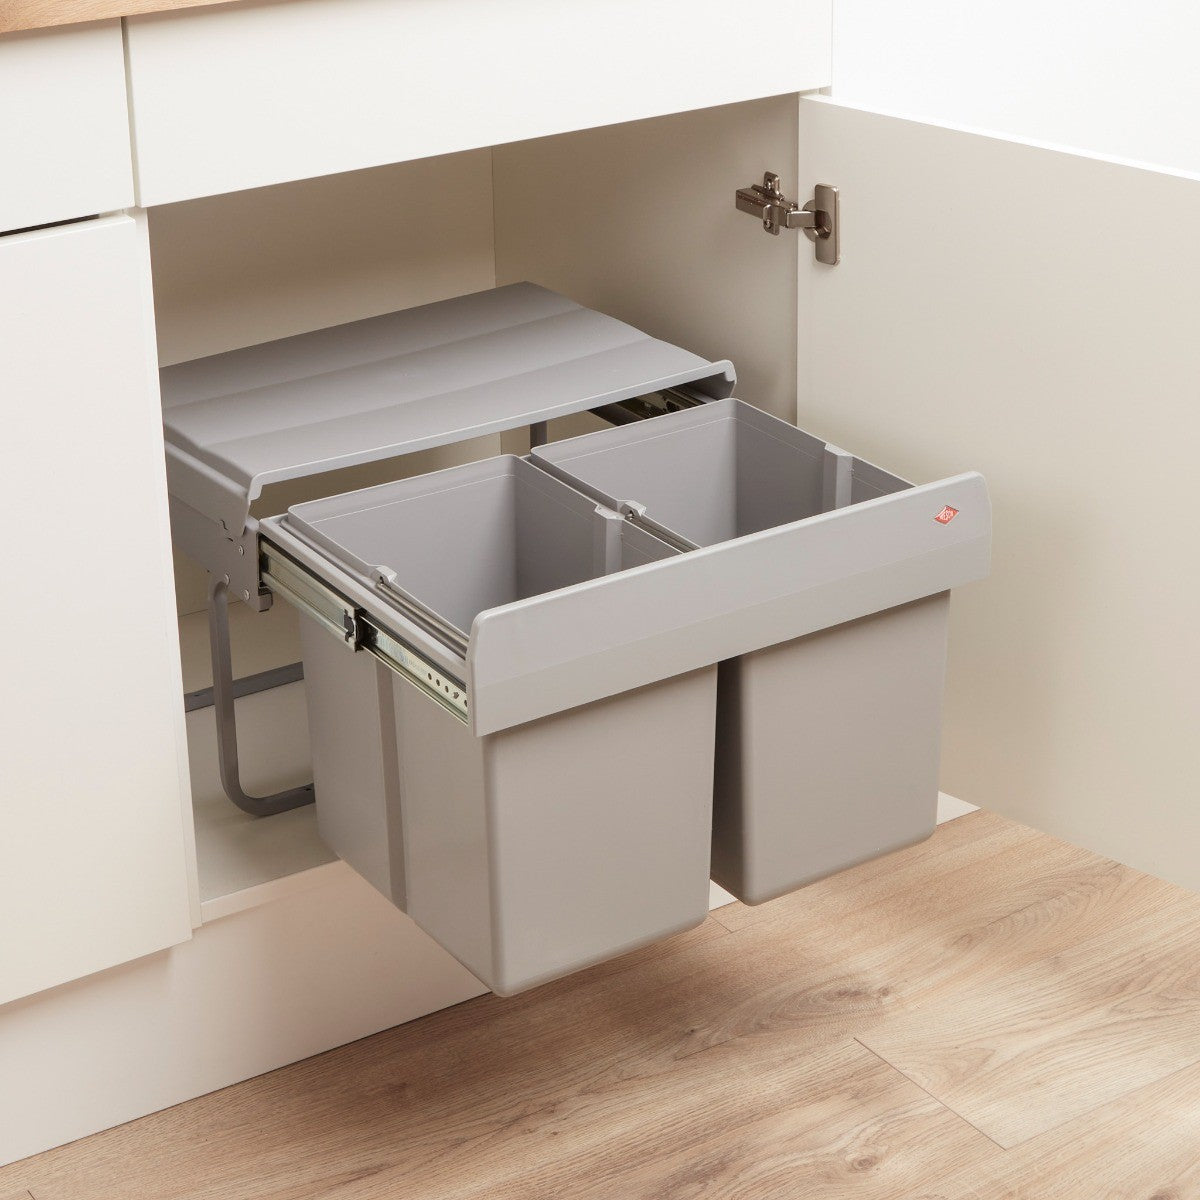 Kitchen Bins - Freestanding Recycling and Caddy Bins - Kitchen Bins